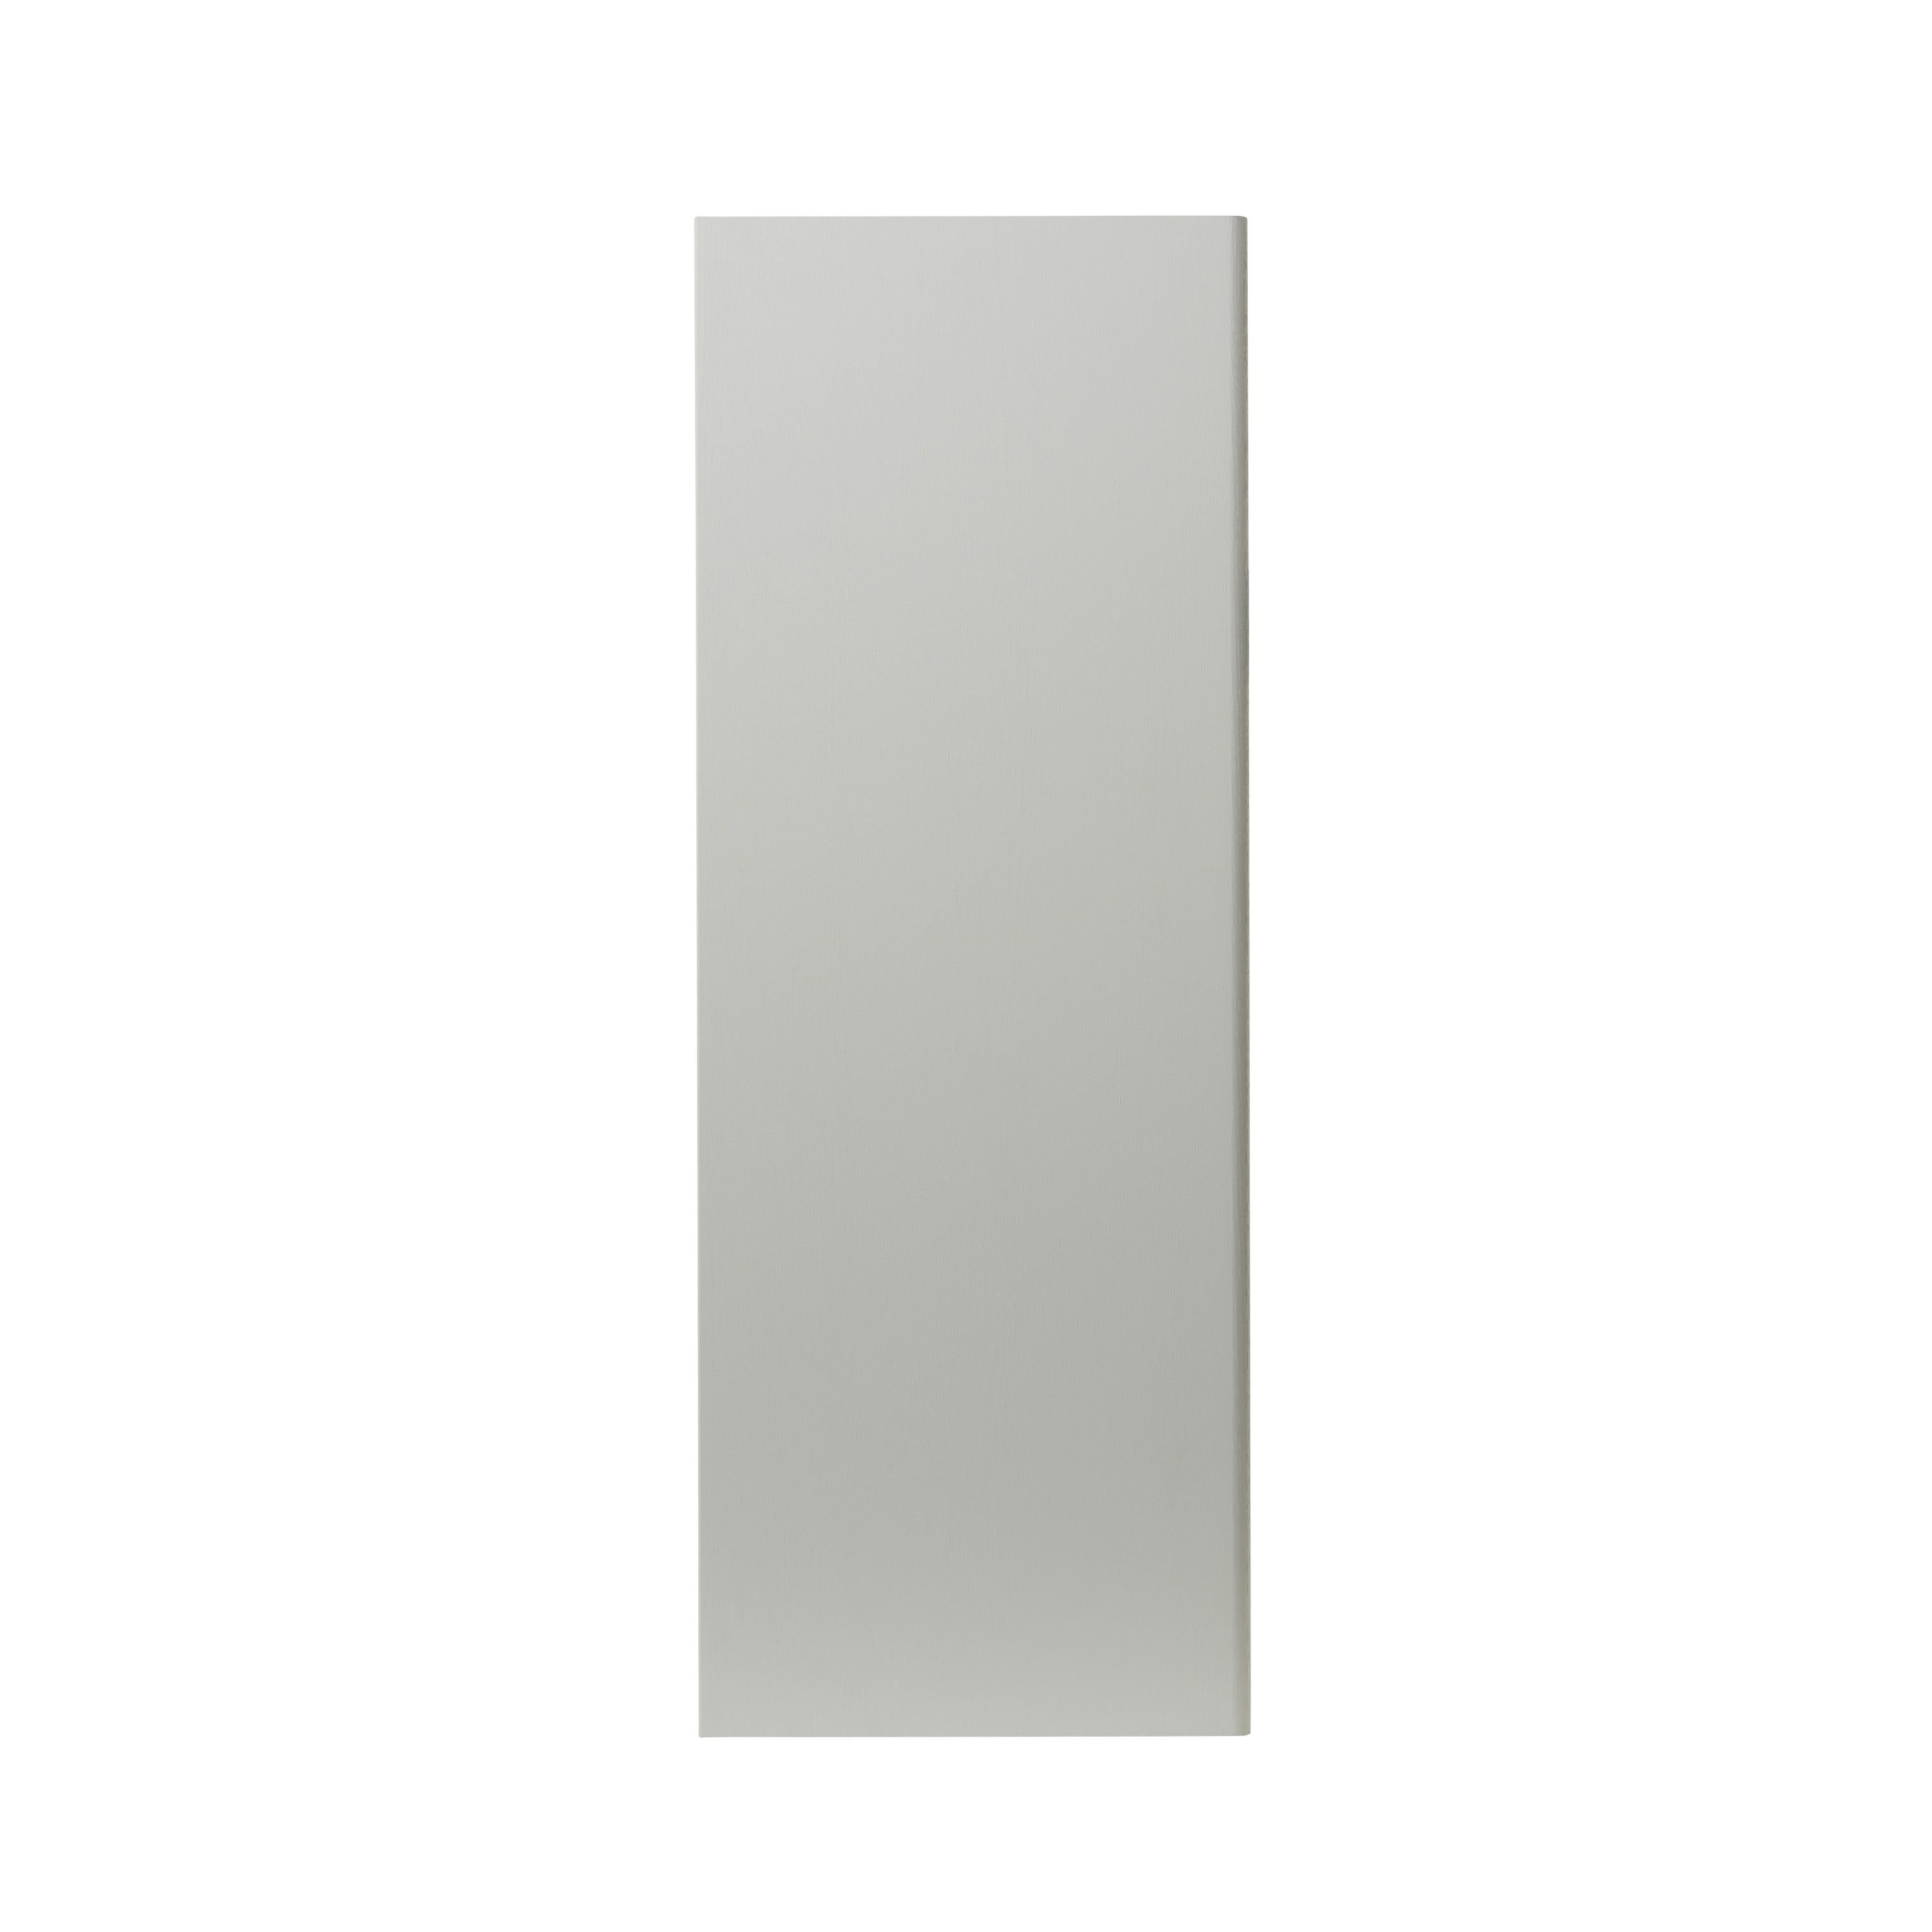 GoodHome Alpinia Matt grey painted wood effect shaker Standard Wall Clad on end panel (H)960mm (W)360mm